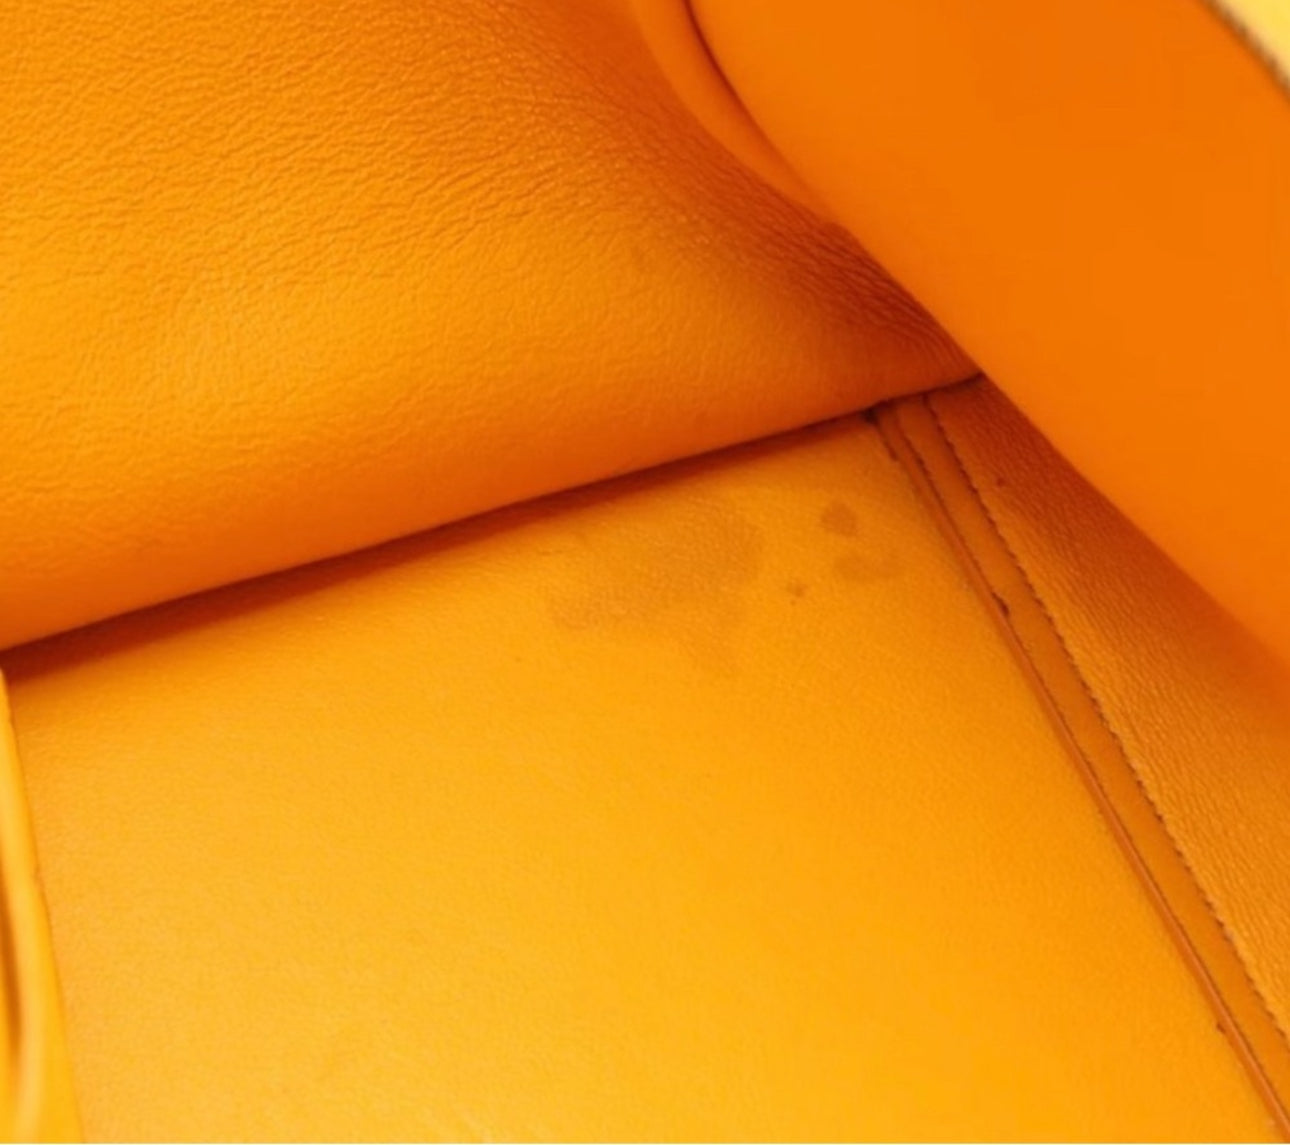 Céline Trapeze Bag Medium in Yellow